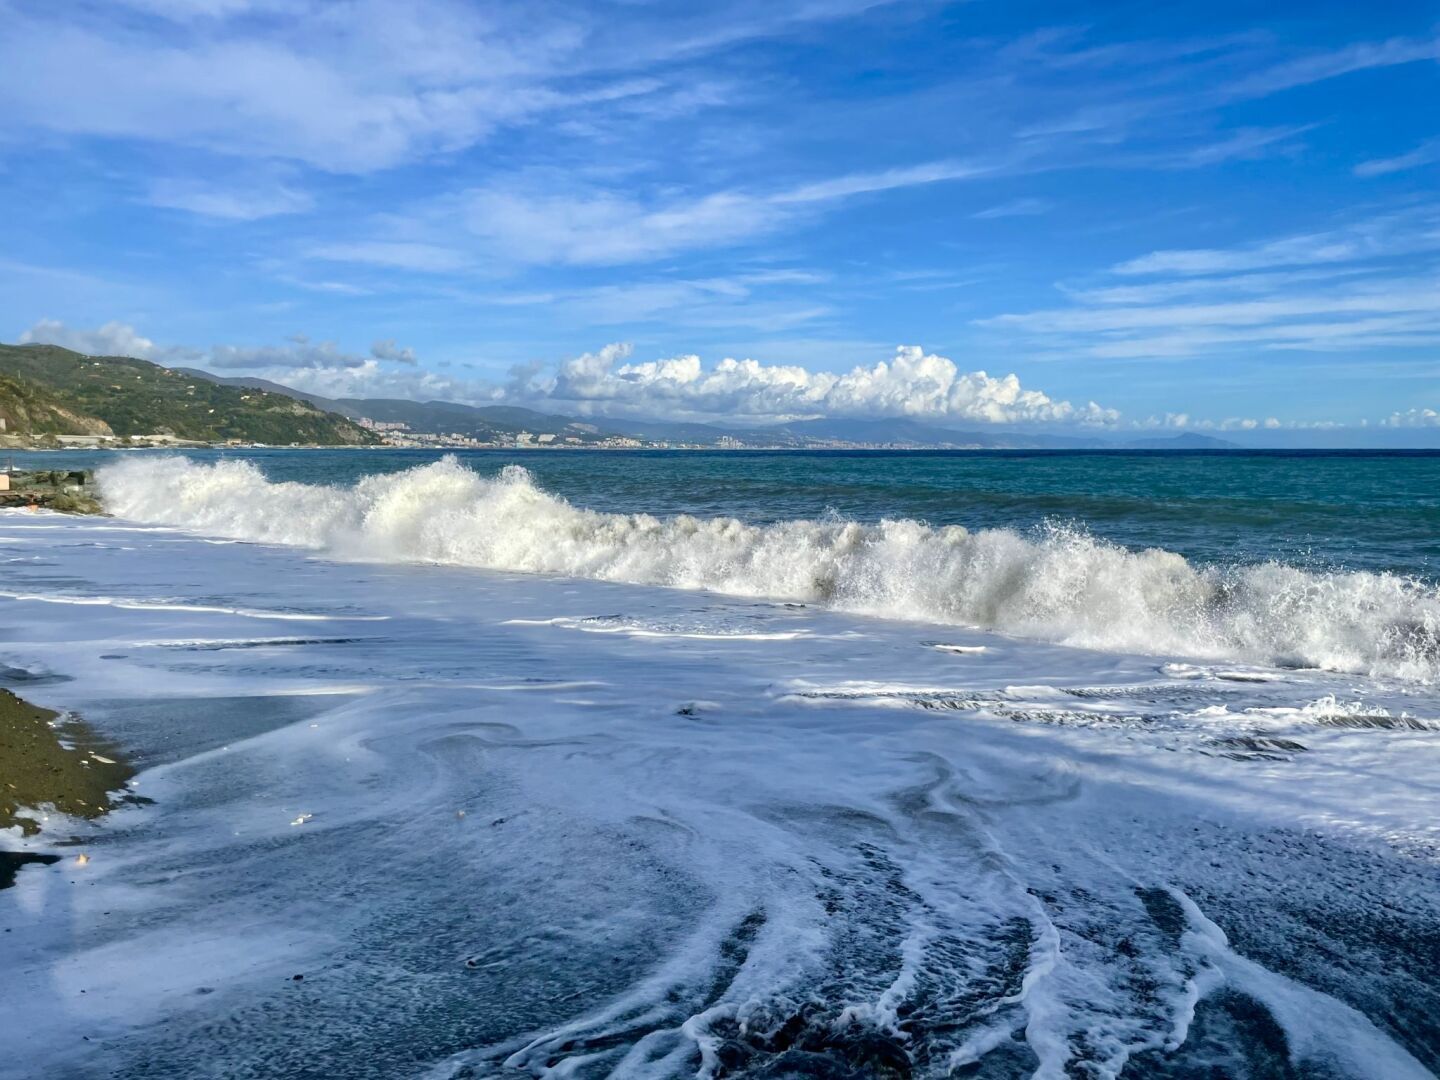 Waves on the Ligurian coast

#meermittwoch #mediterraneansea  #seascape